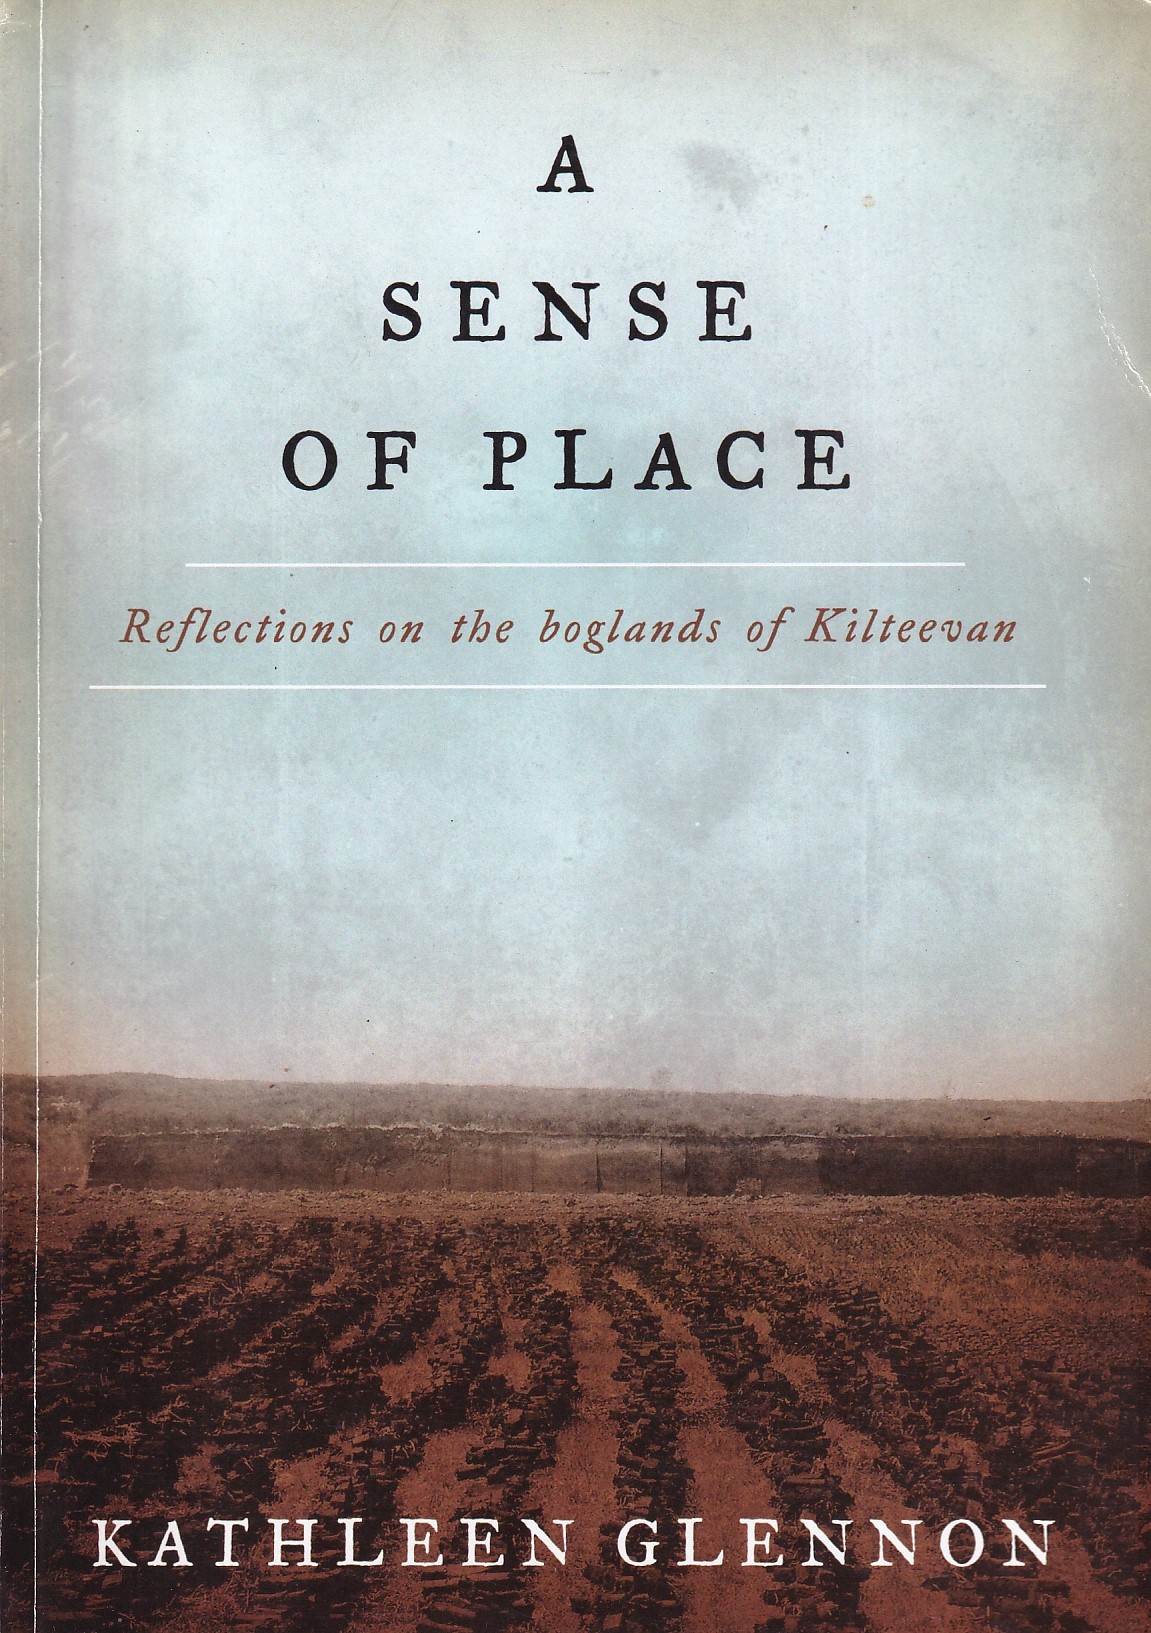 A Sense of Place: Reflections on the boglands of Kilteevan by Kathleen Glennon